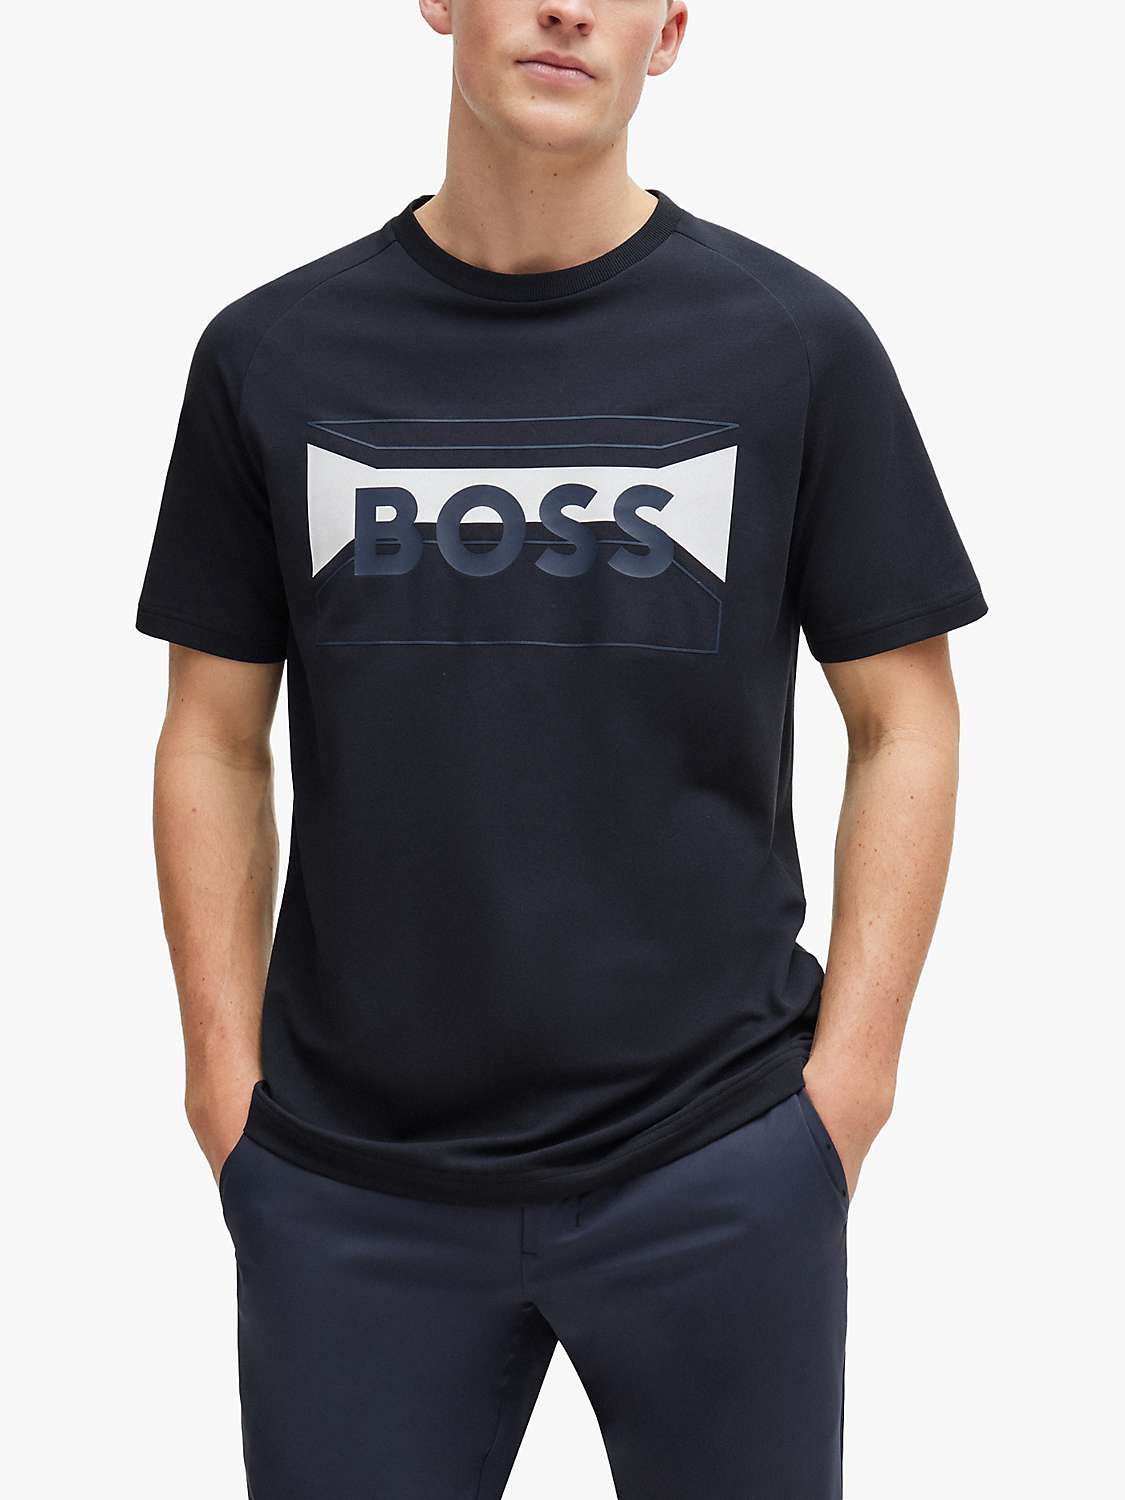 Buy BOSS Tee 2 402 Short Sleeve T-Shirt, Dark Blue Online at johnlewis.com